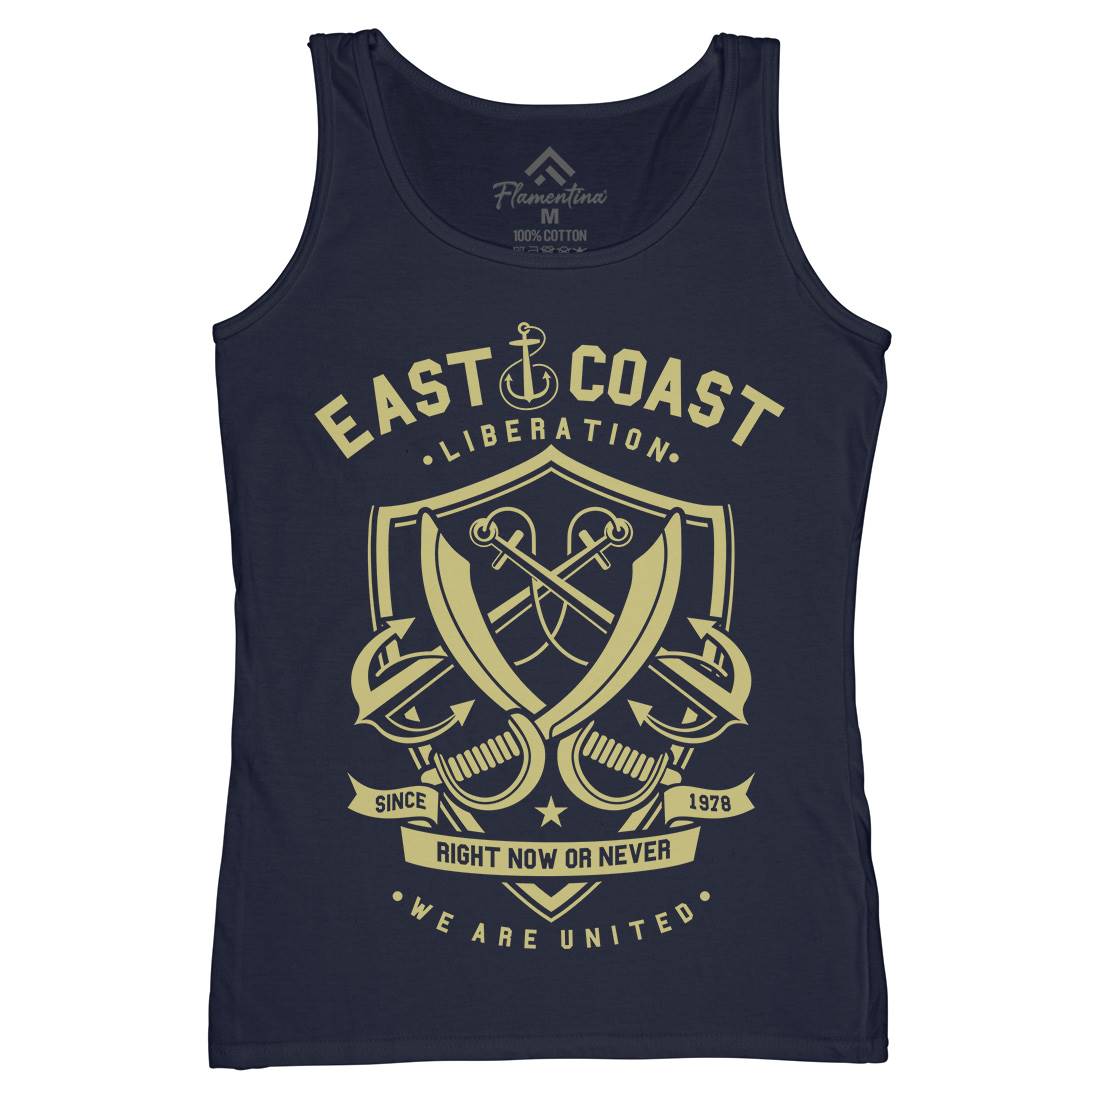 East Coast Anchor Womens Organic Tank Top Vest Navy A226